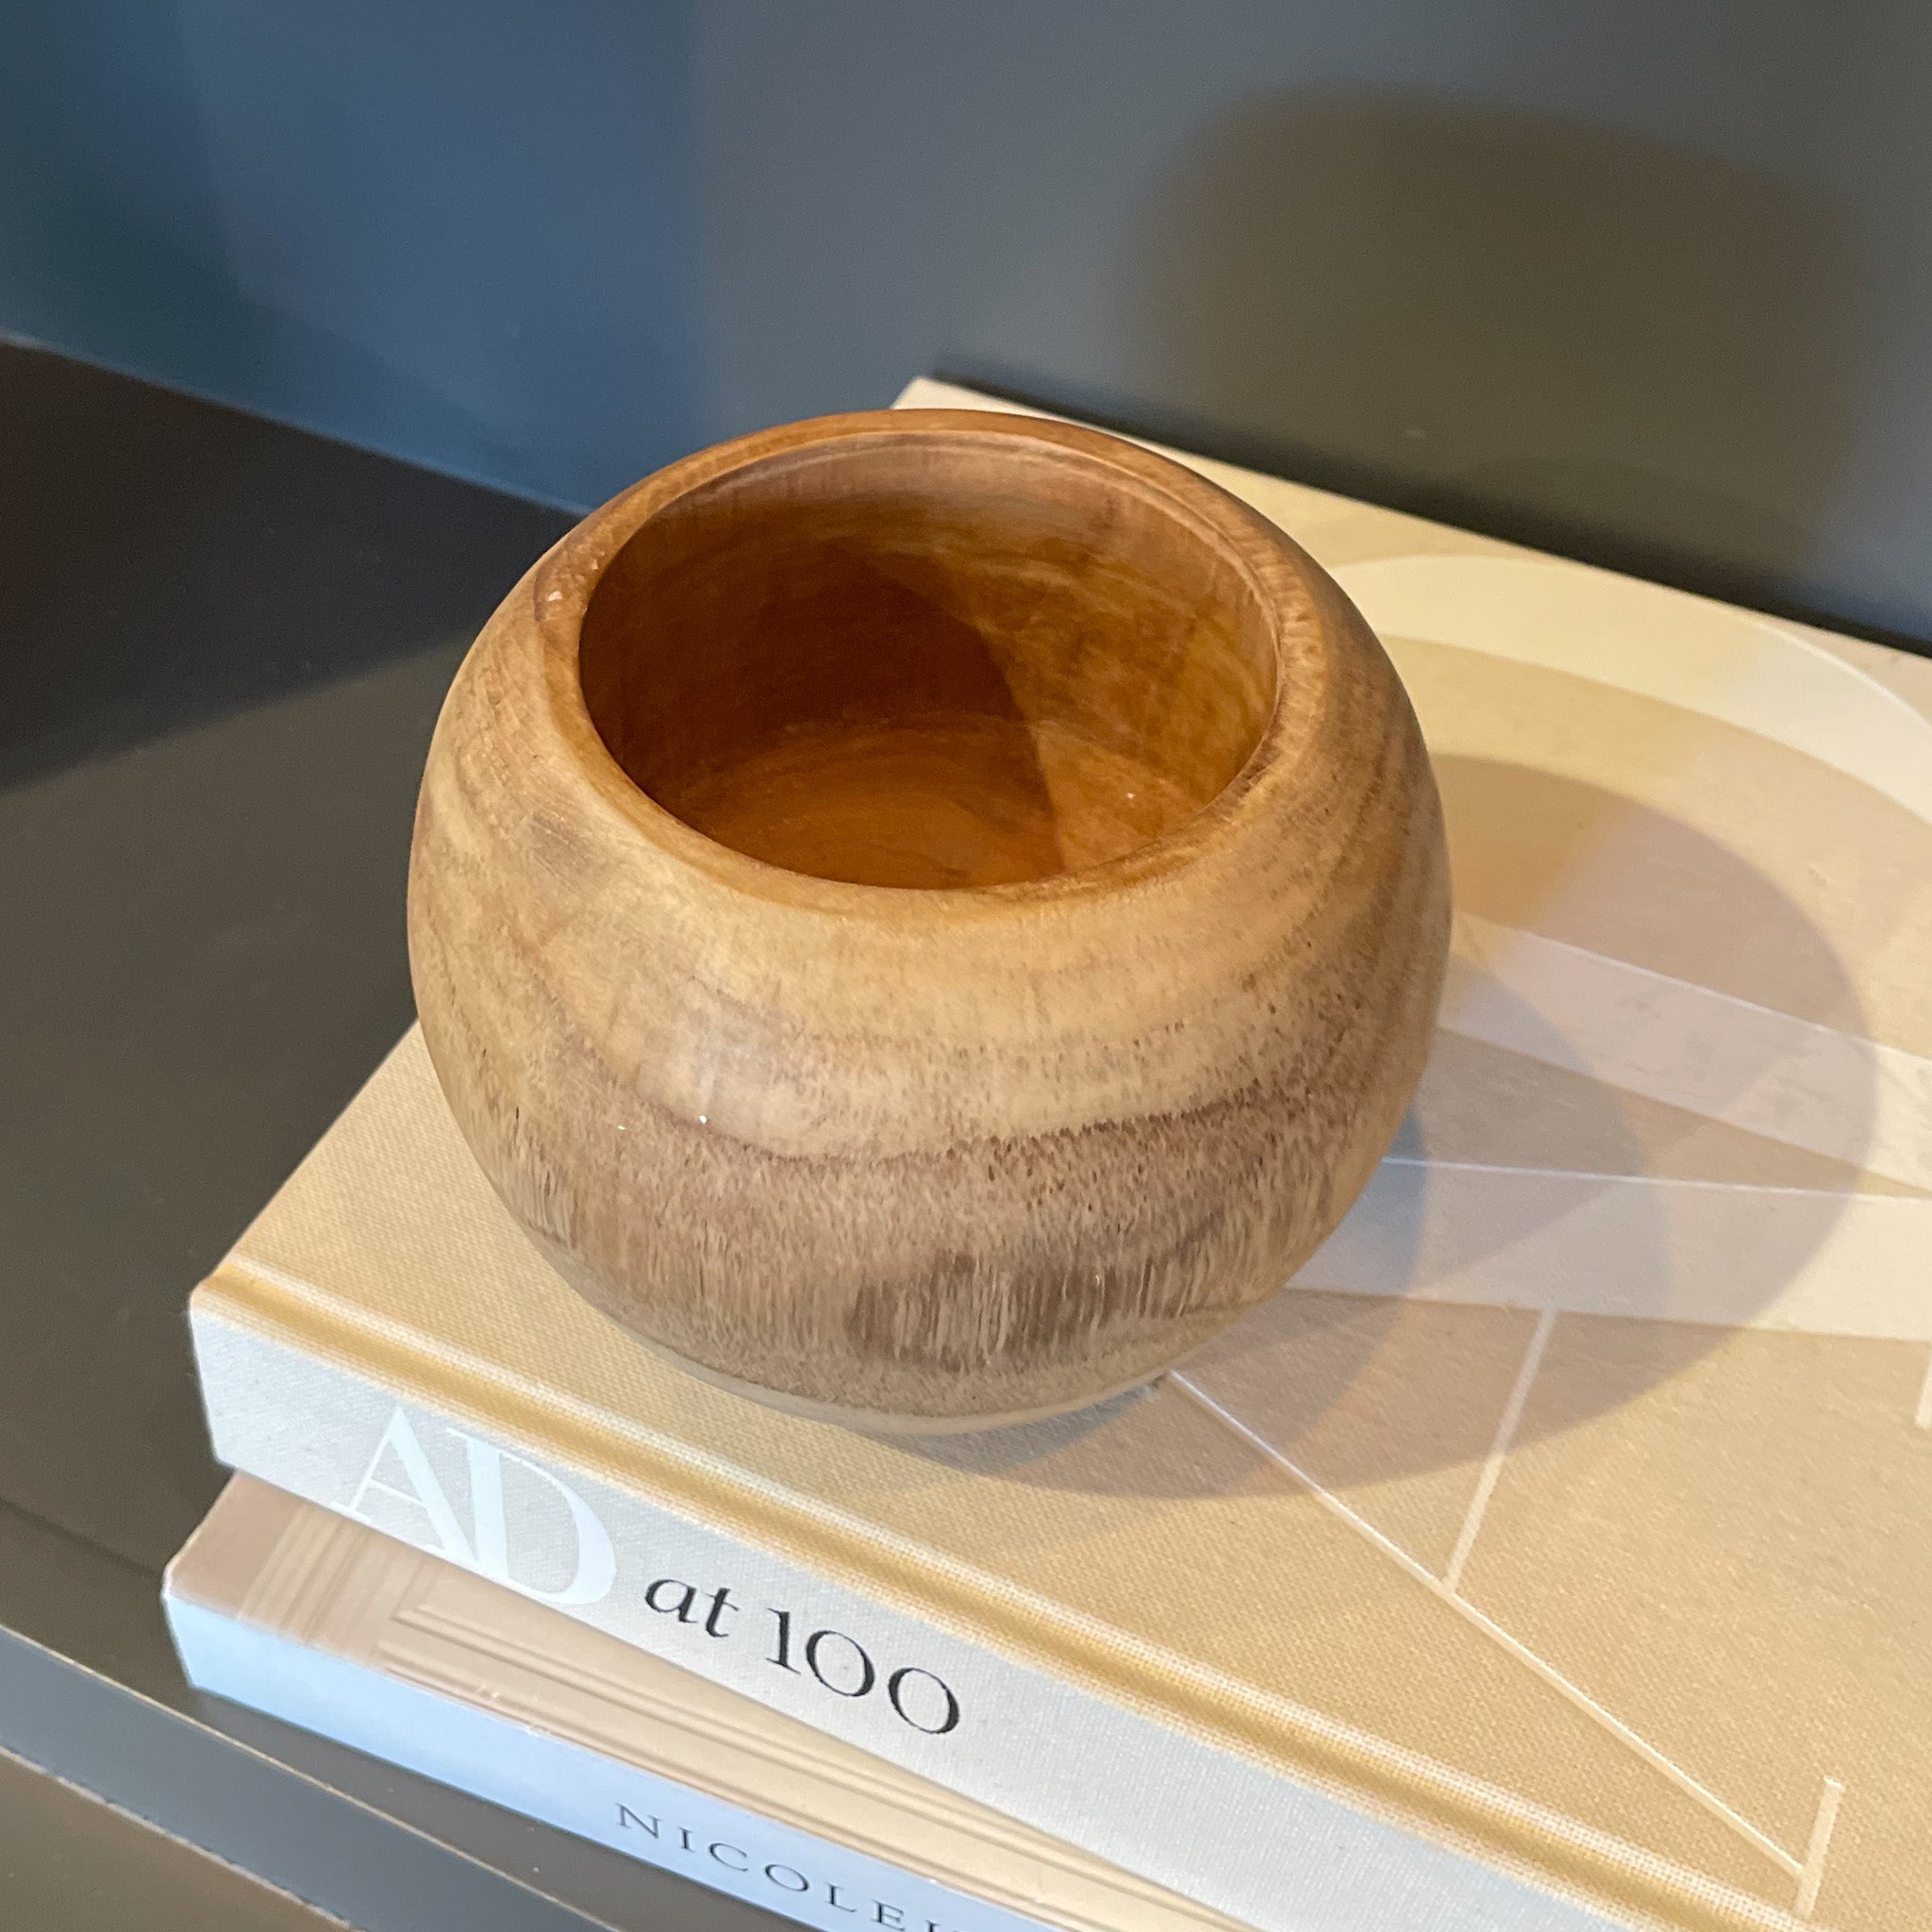 Round Teak Wood Vase - Rare Earth Mercantile